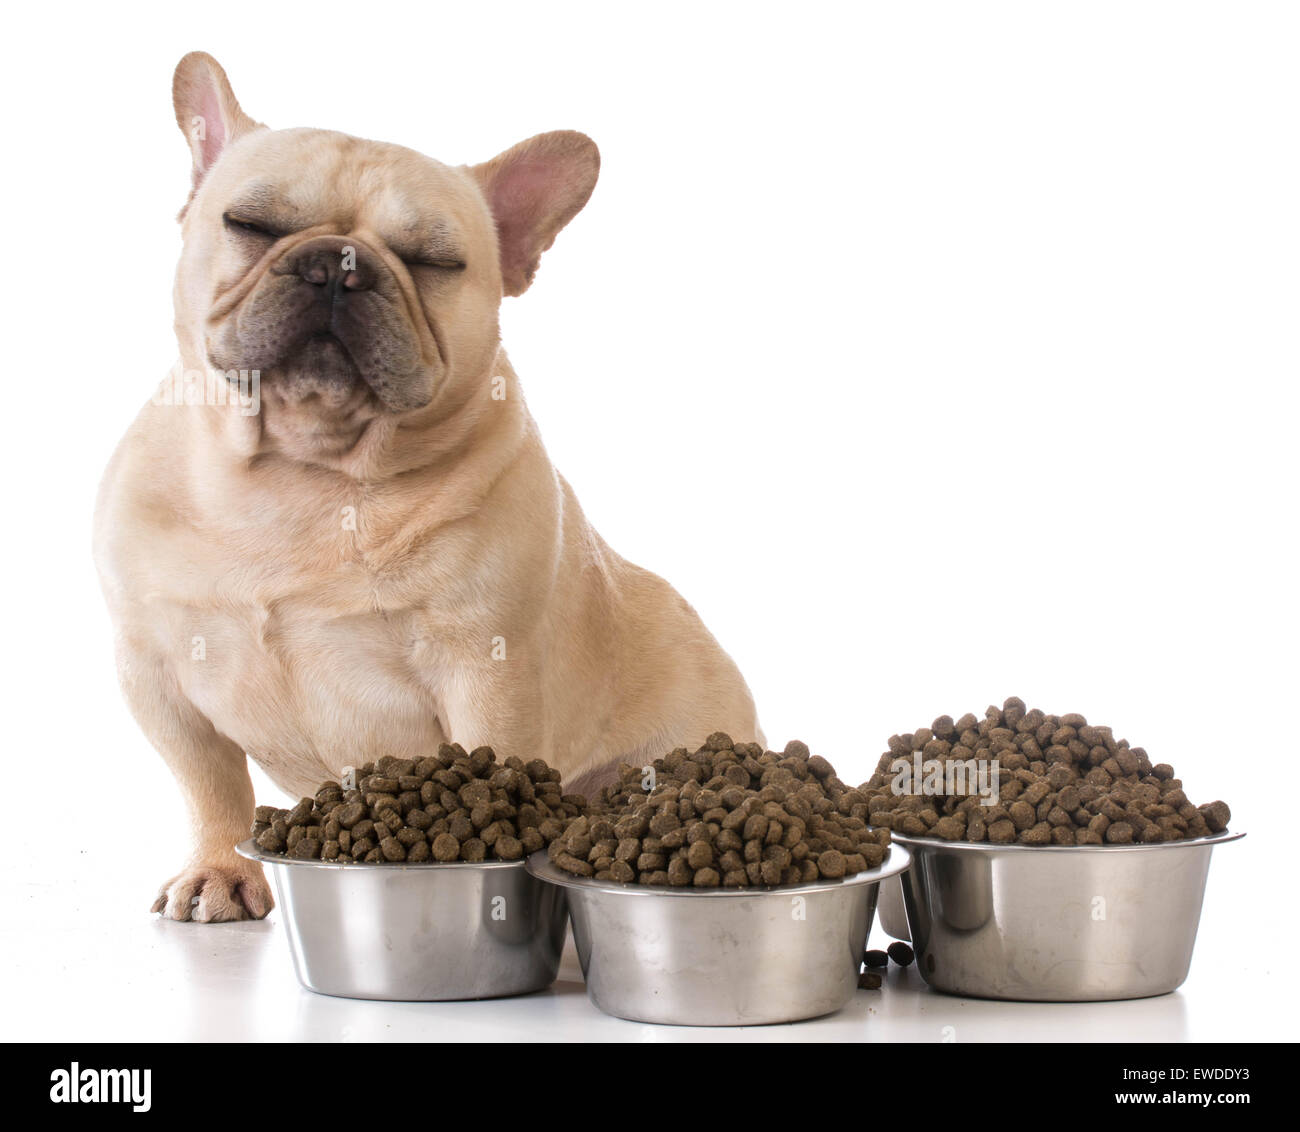 picky eater - french bulldog refusing to eat on white background Stock Photo